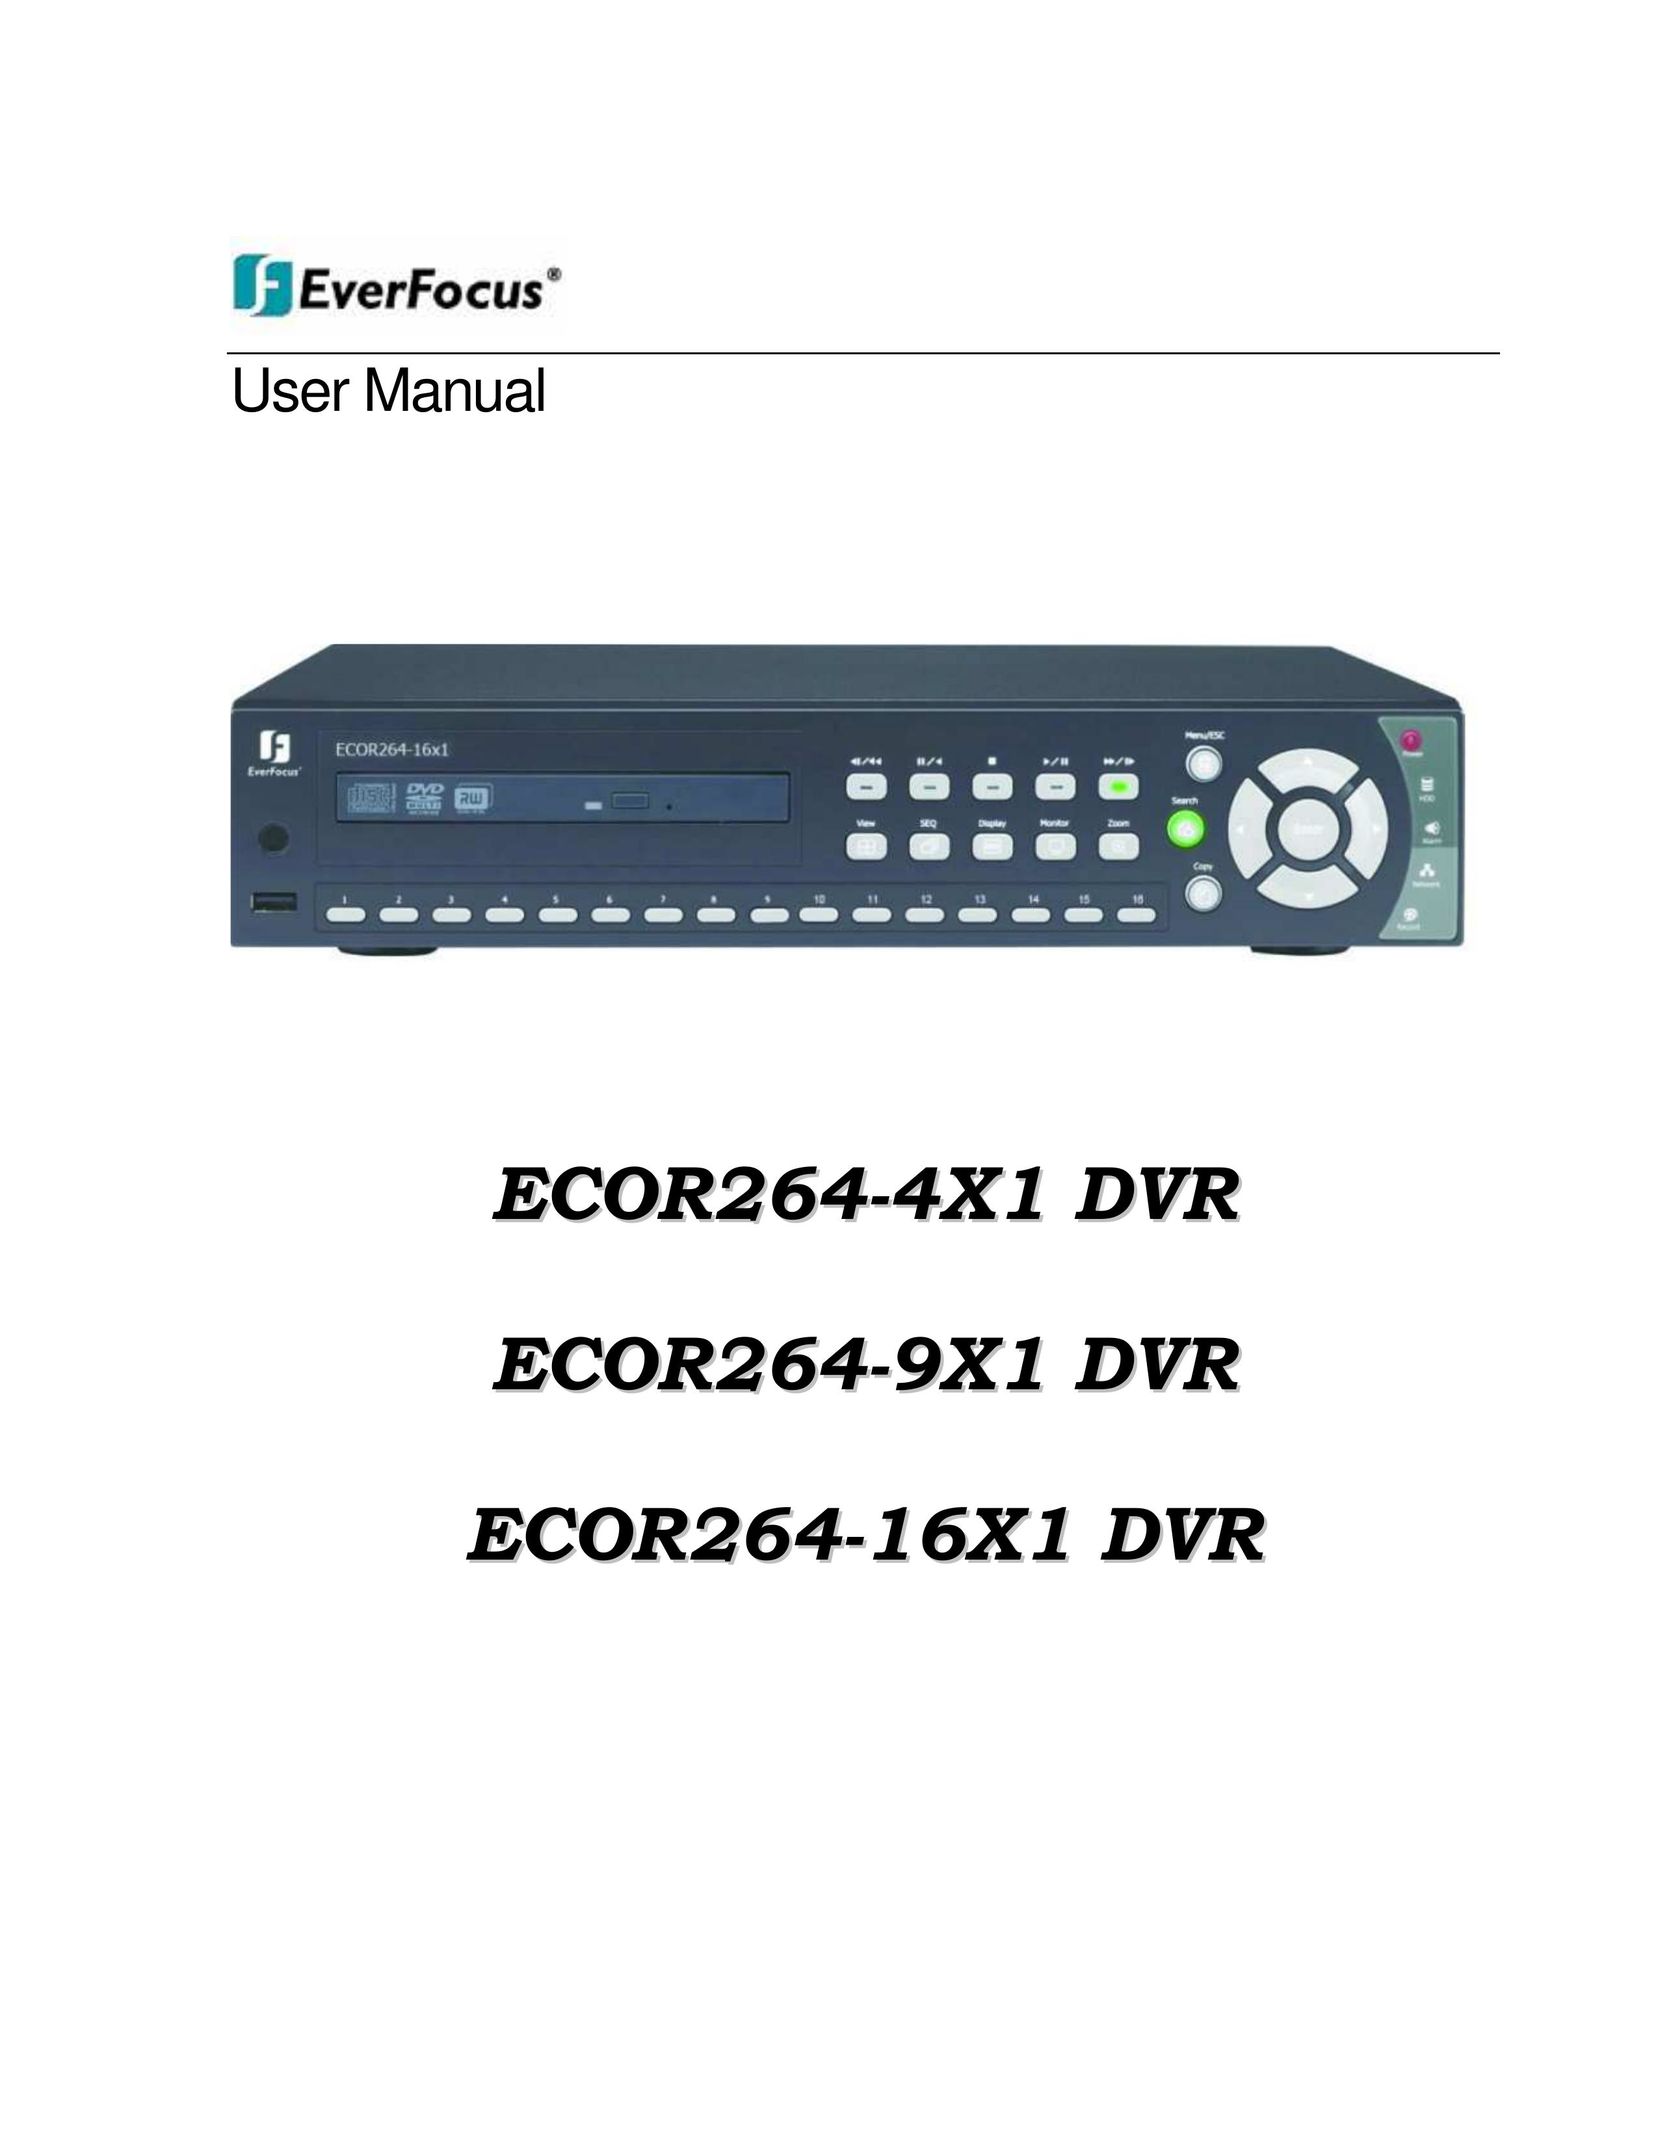 EverFocus ECOR264-9X1 DVR User Manual